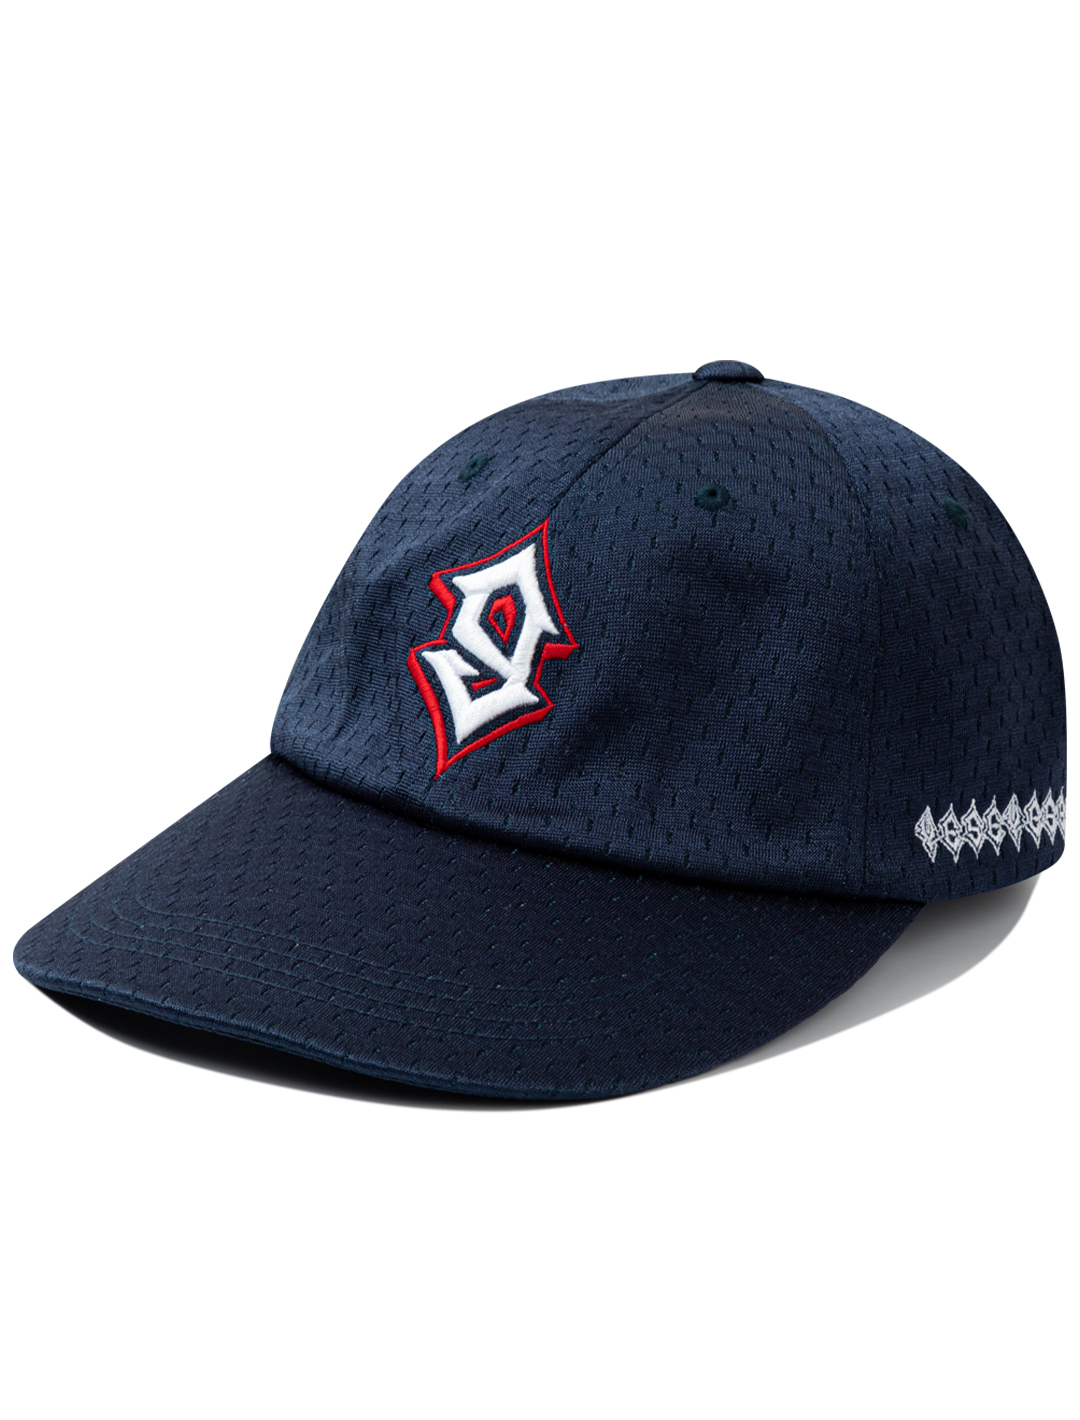 Baseball Mesh Cap Navy